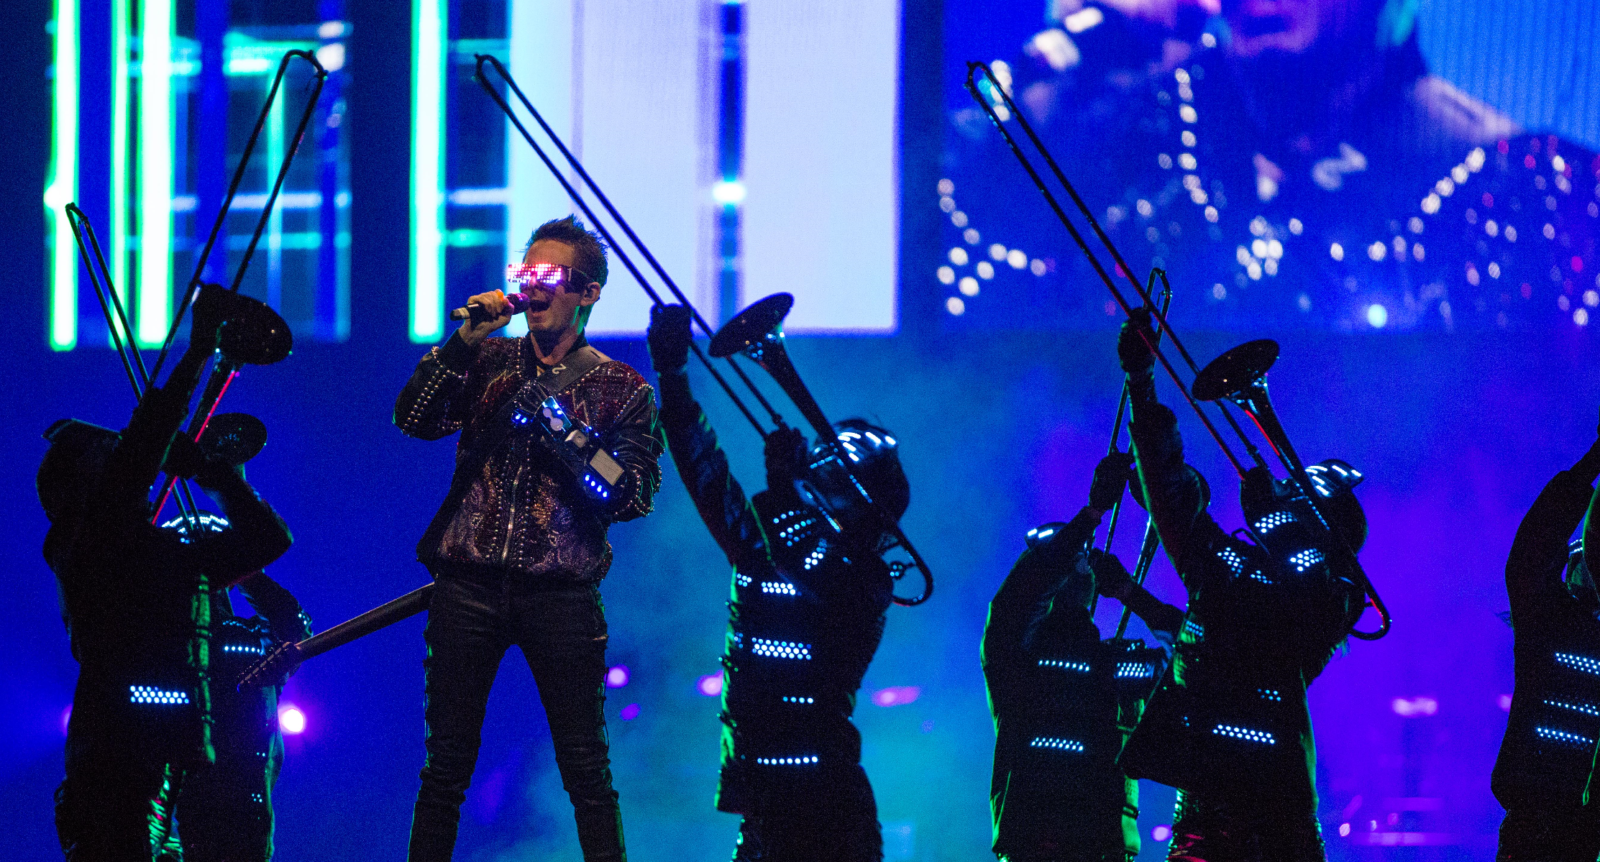 Matt Bellamy, lead singer of Muse, onstage